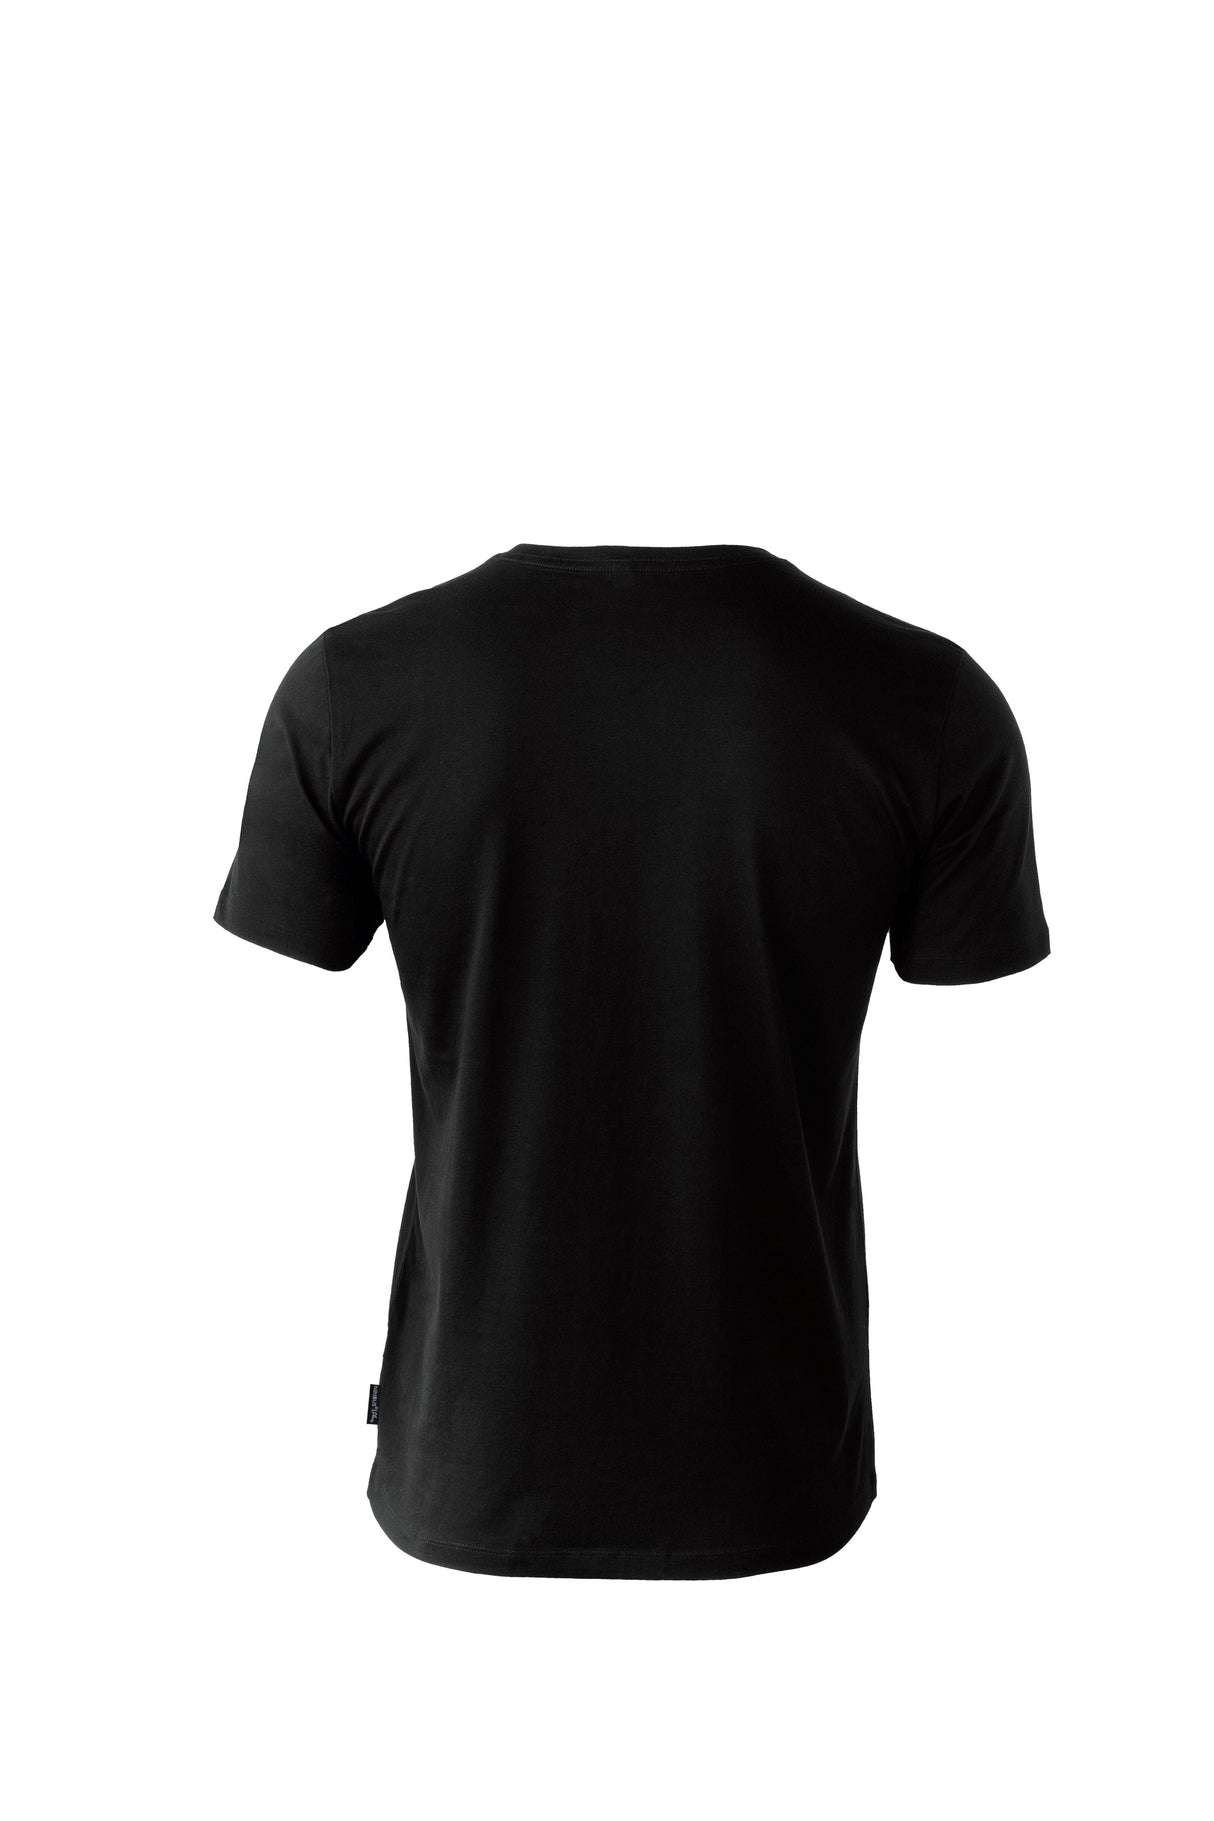 Nimbus Play Orlando – Soft Round Neck T-Shirt